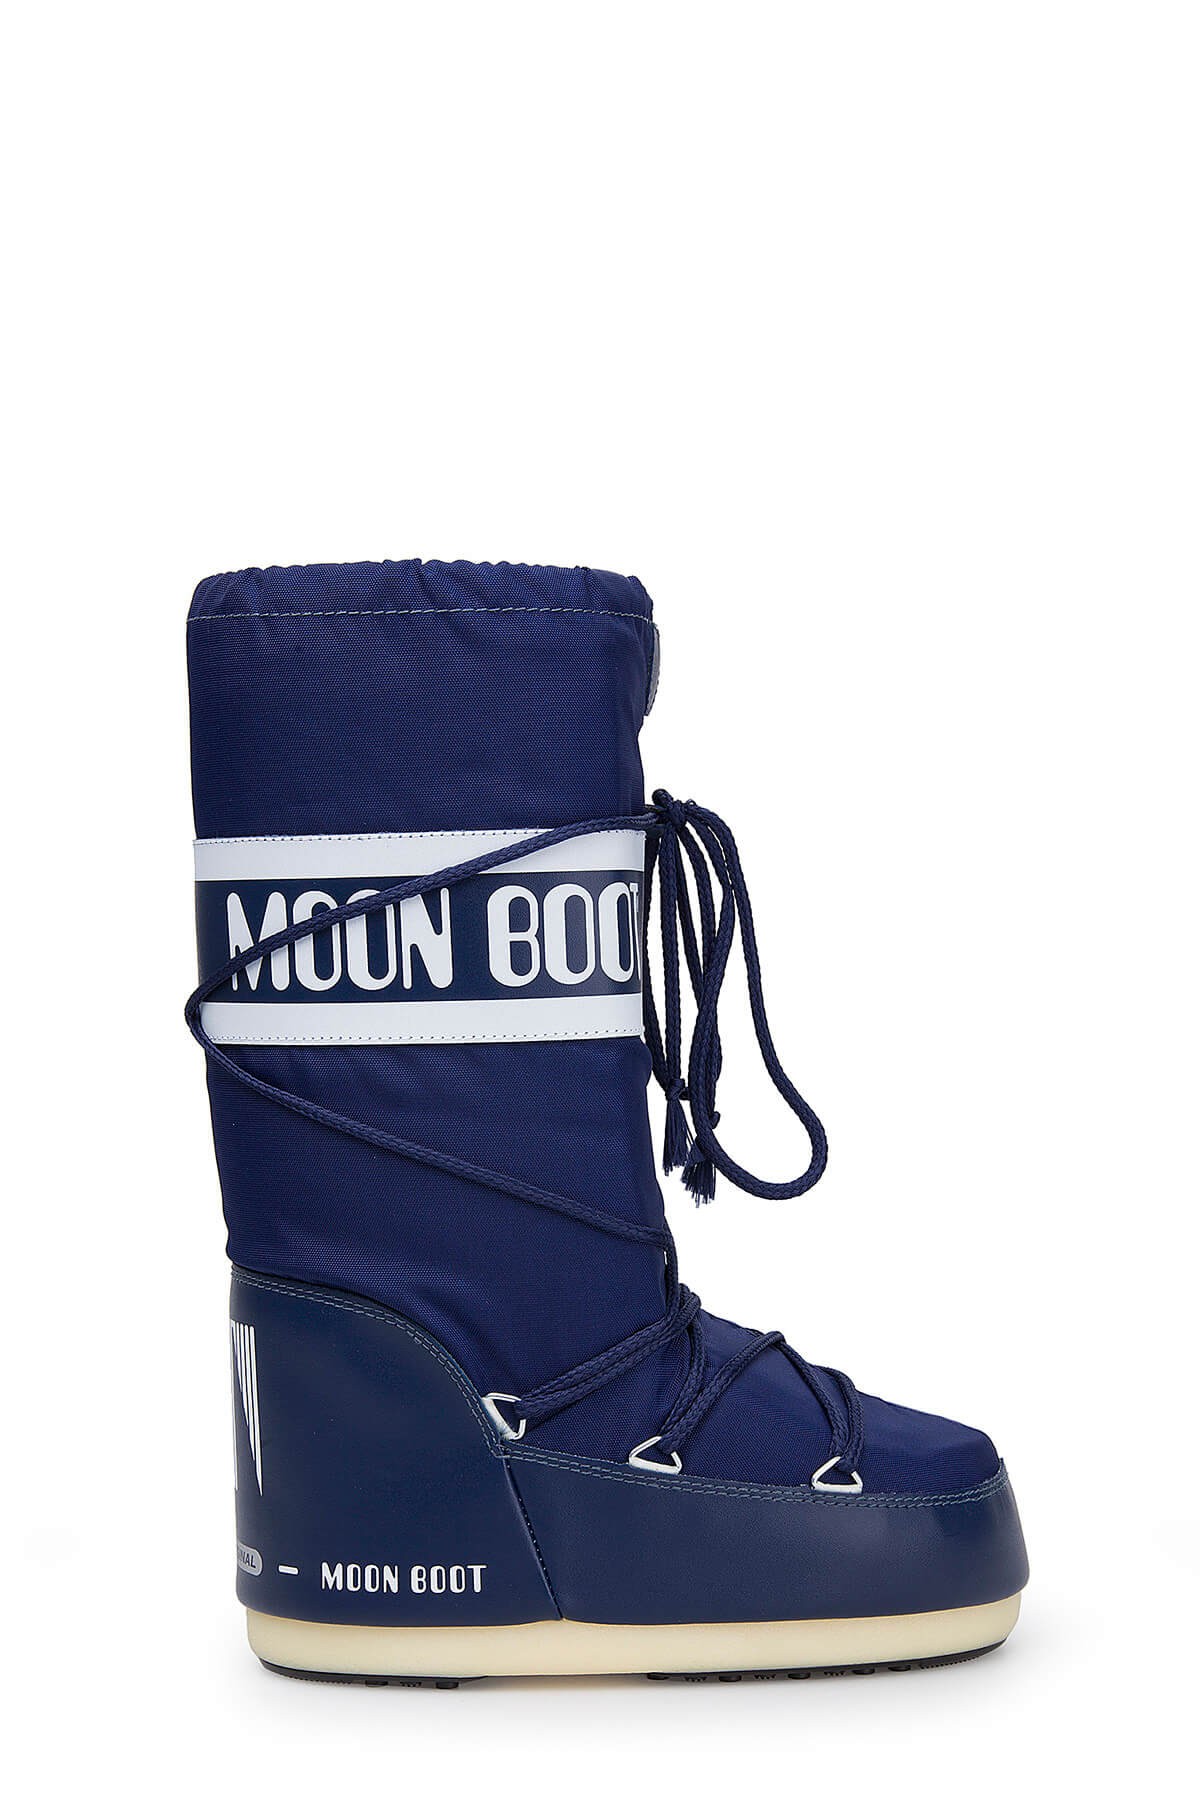 Moon Boot Icon Kadın Kar Botu 14004400-002